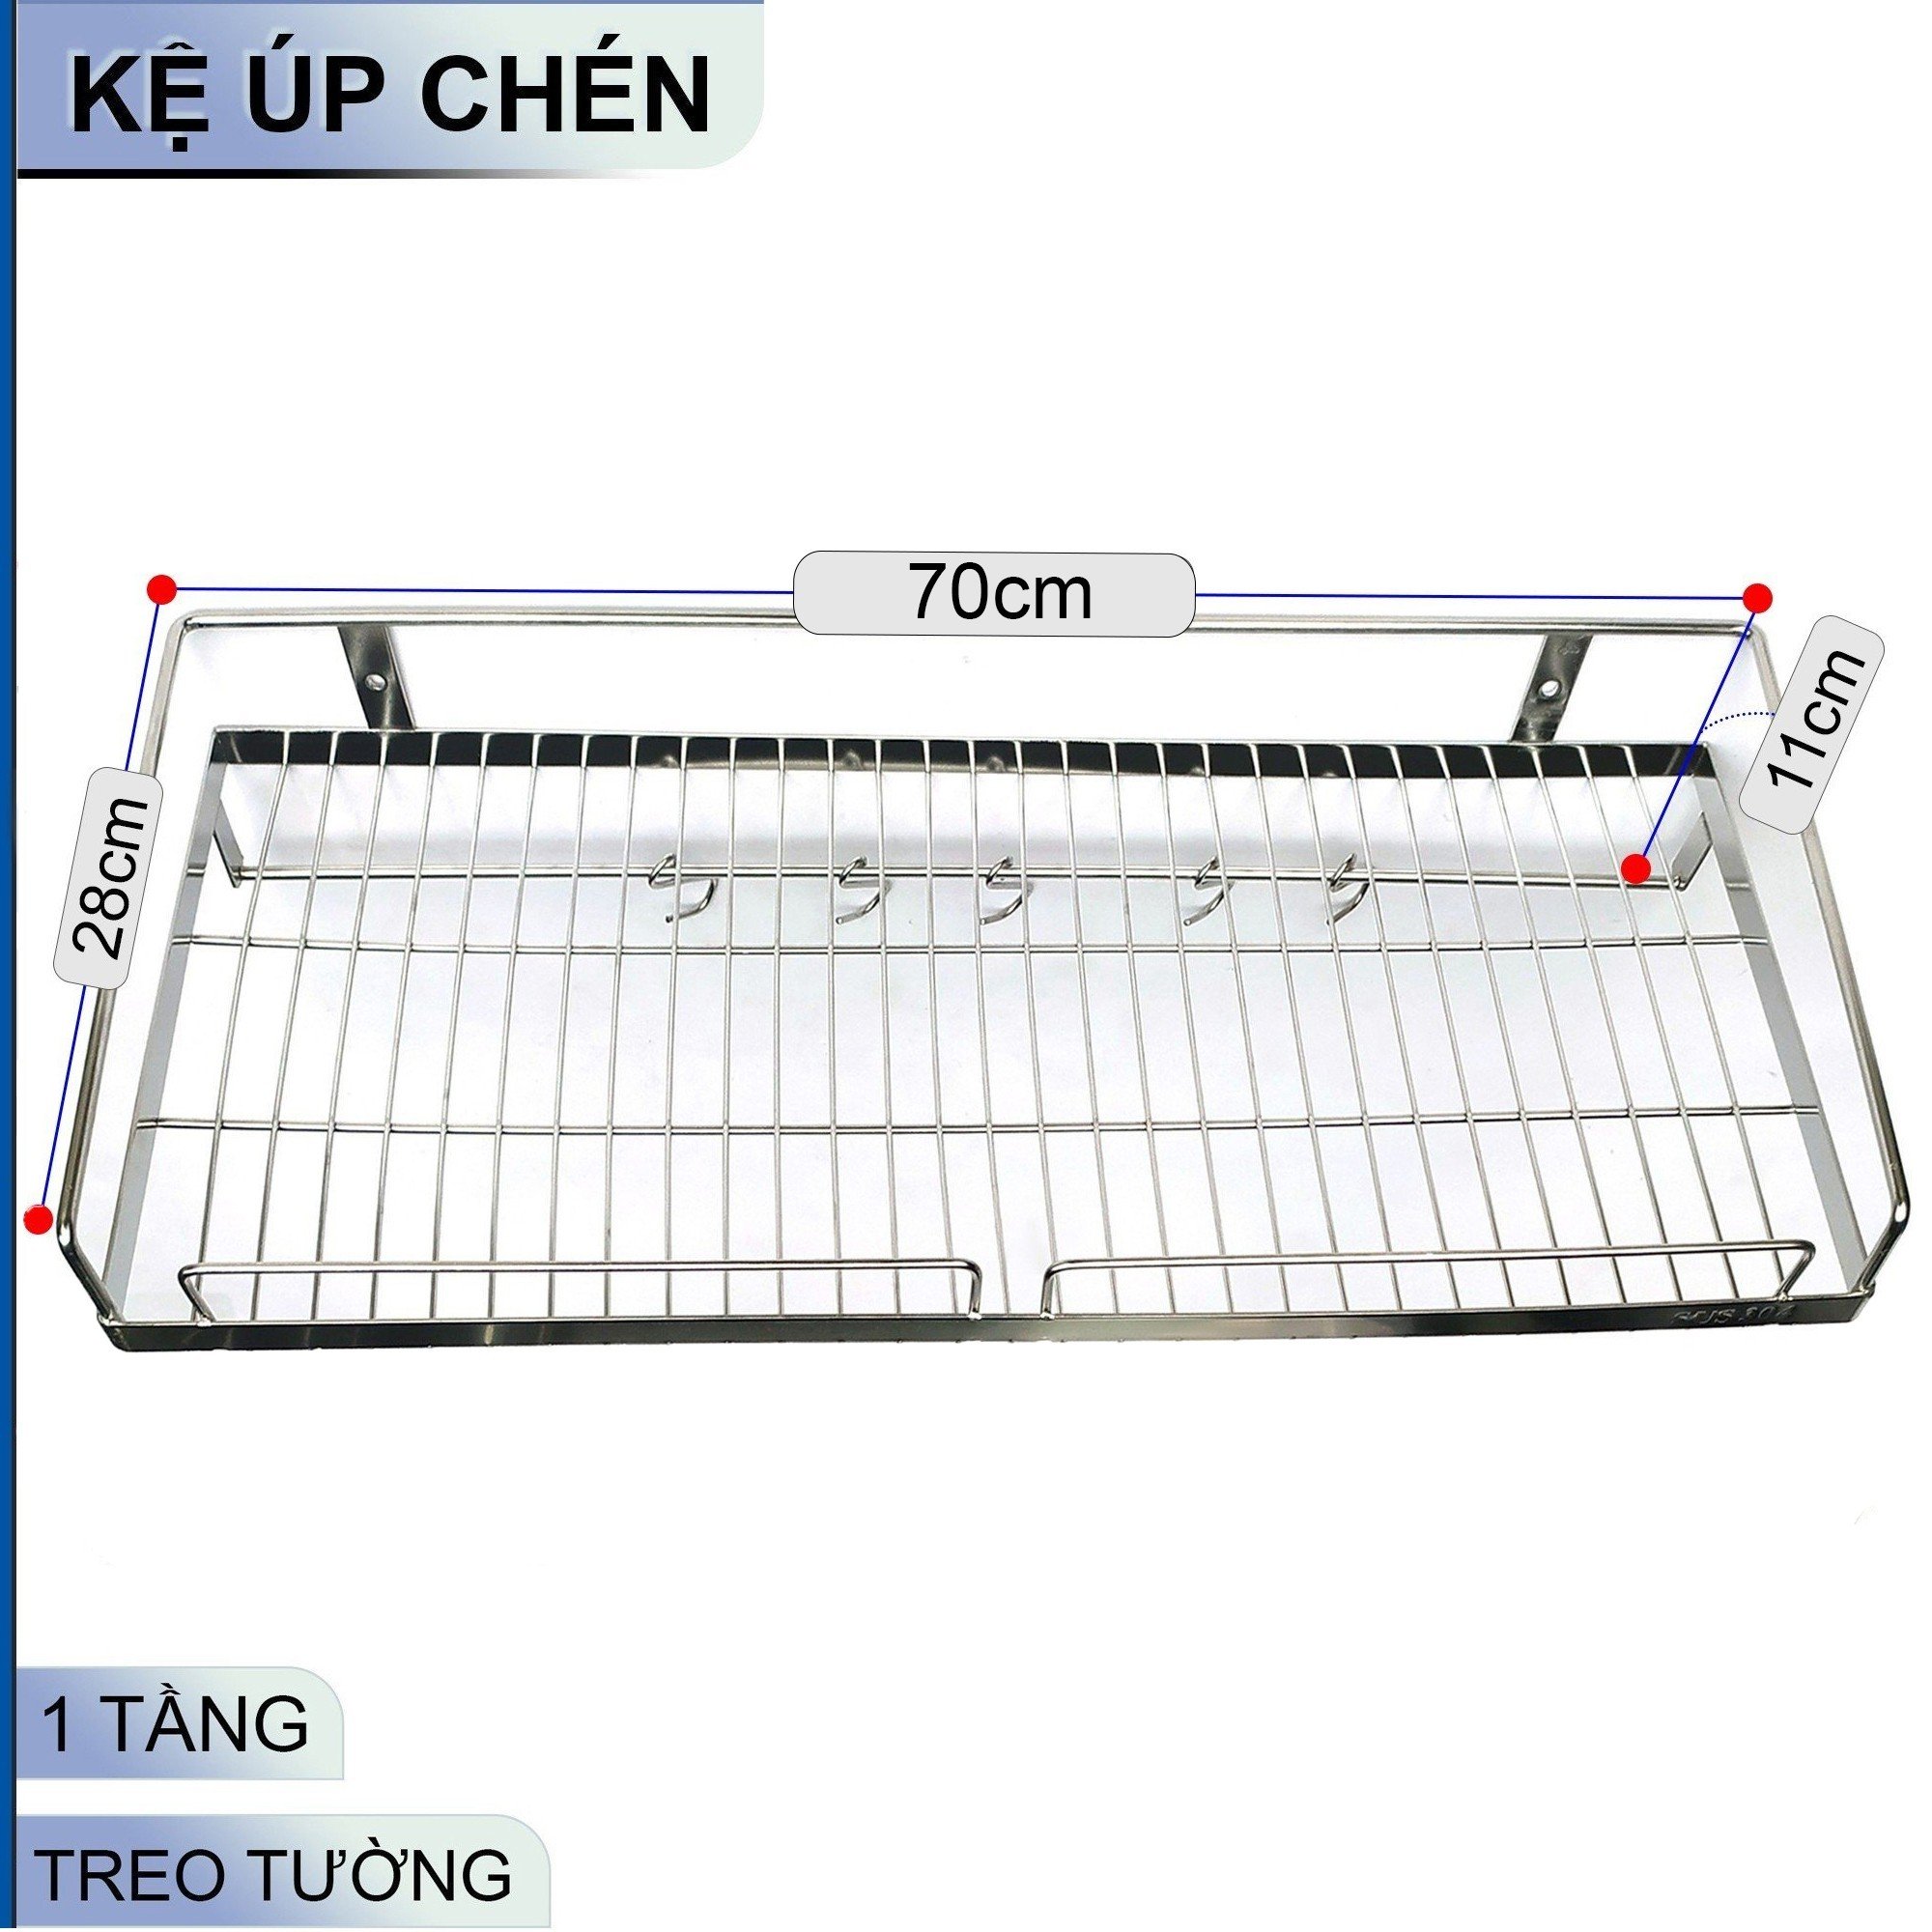 ke-chen-1-tang-inox-ki-cd01-70cm-vattugiagoc.com